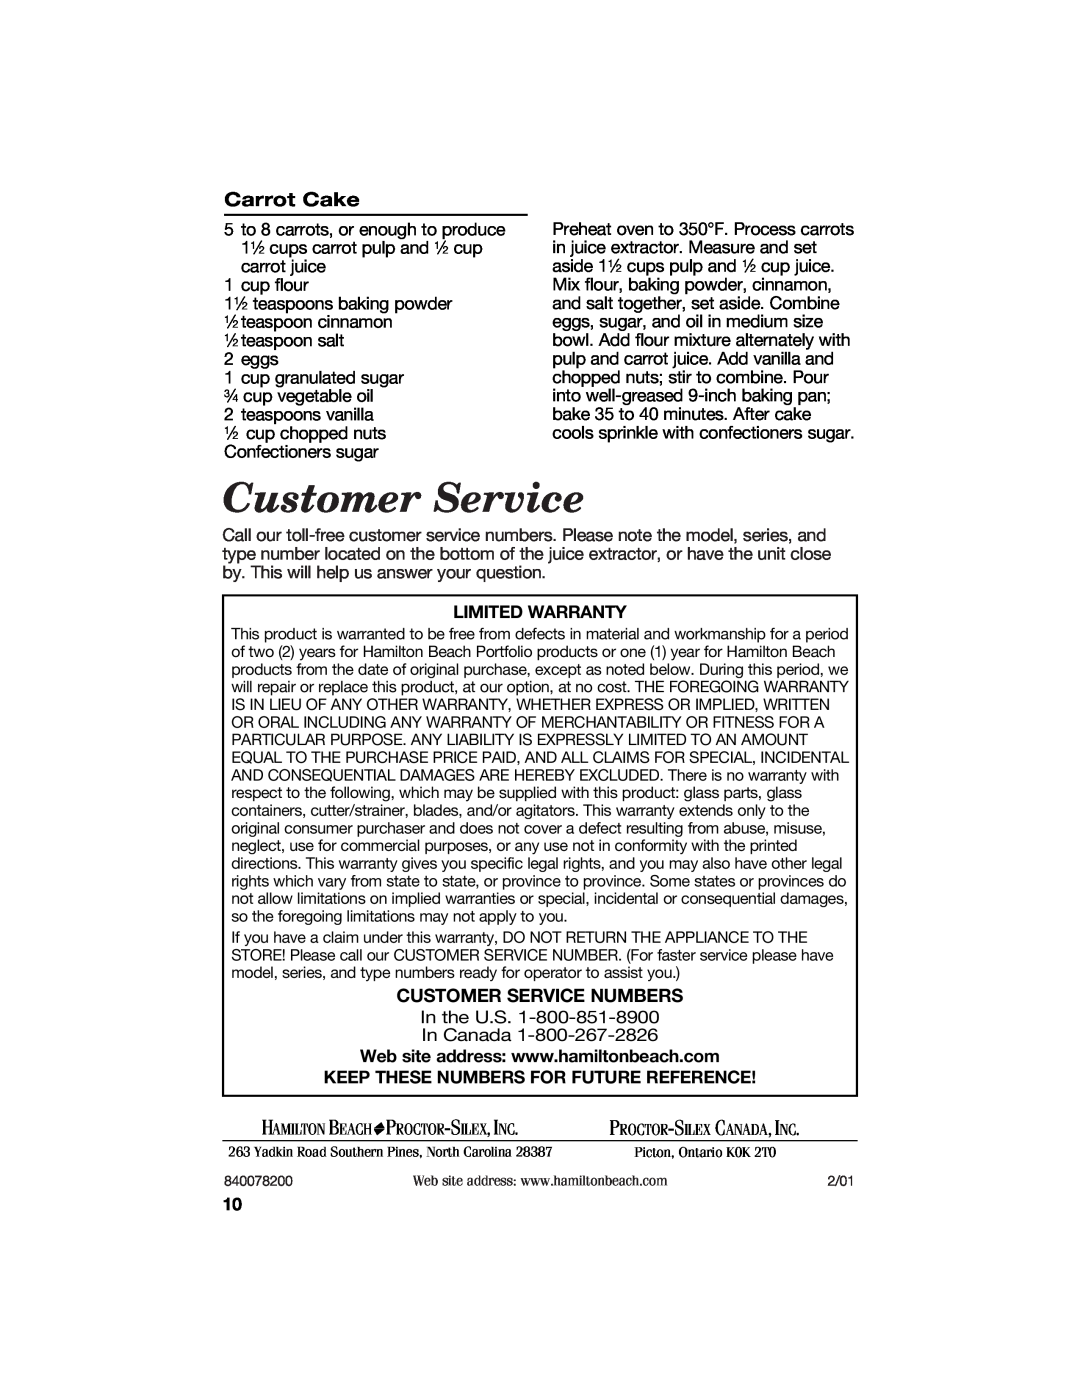 Hamilton Beach 67333 manual Carrot Cake, Customer Service Numbers 